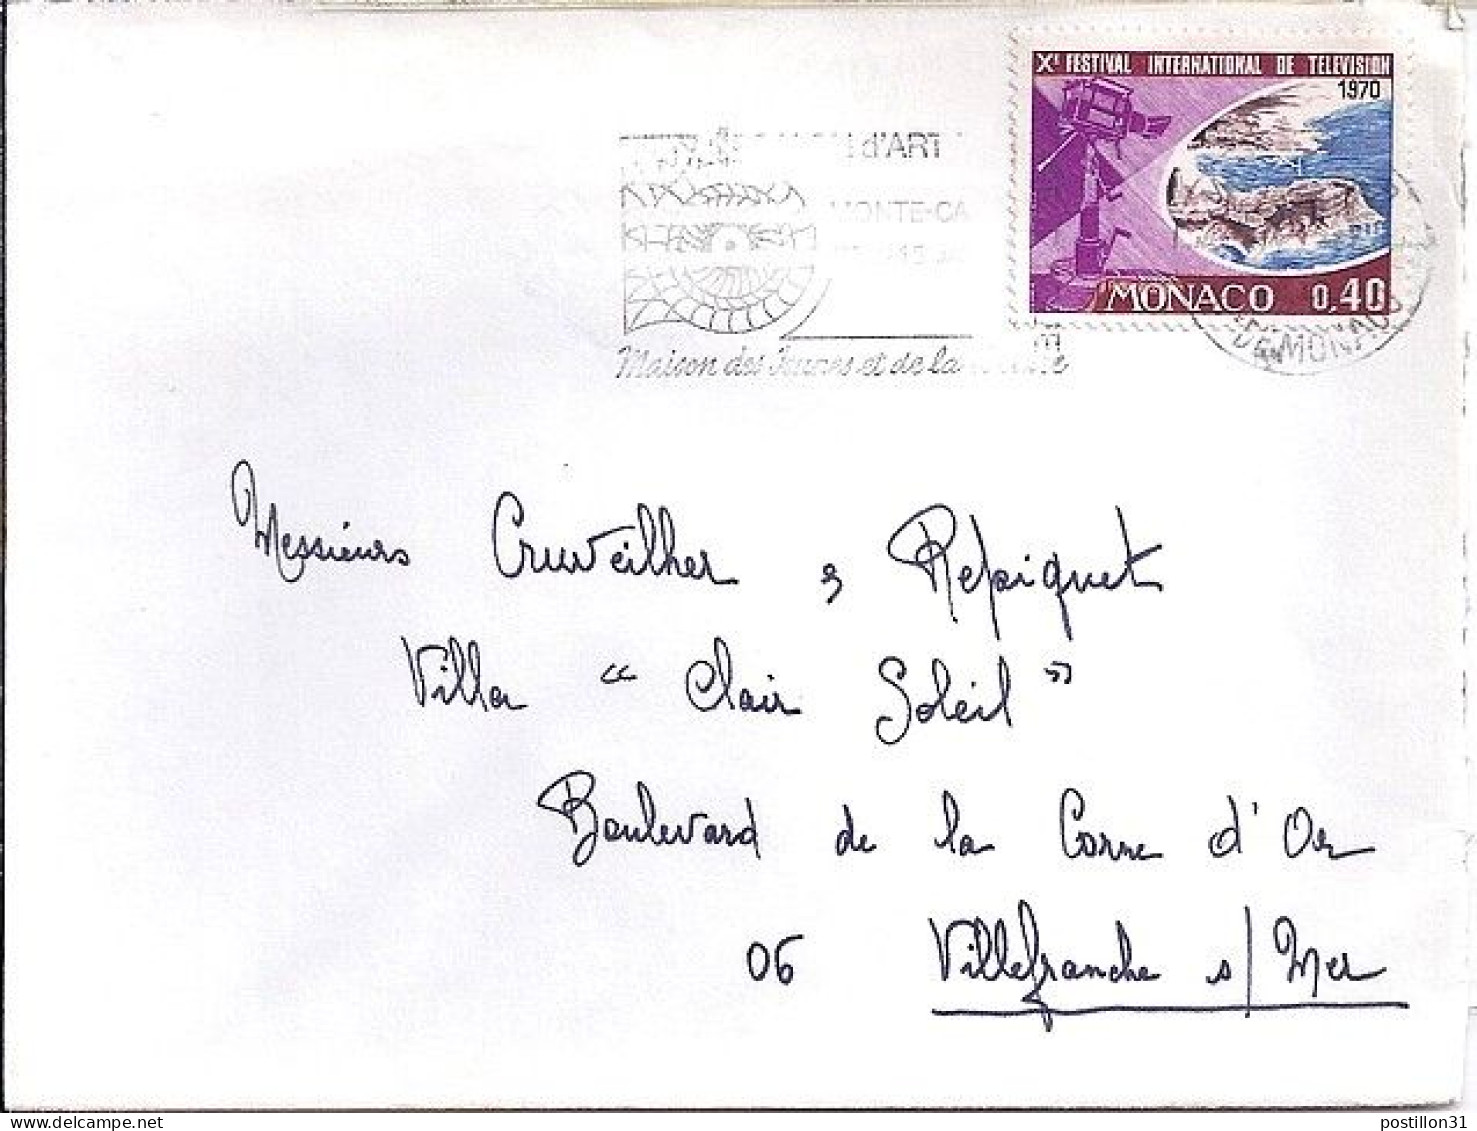 MONACO N° 807 S/L. DE MONTE CARLO/1970  POUR FRANCE - Briefe U. Dokumente